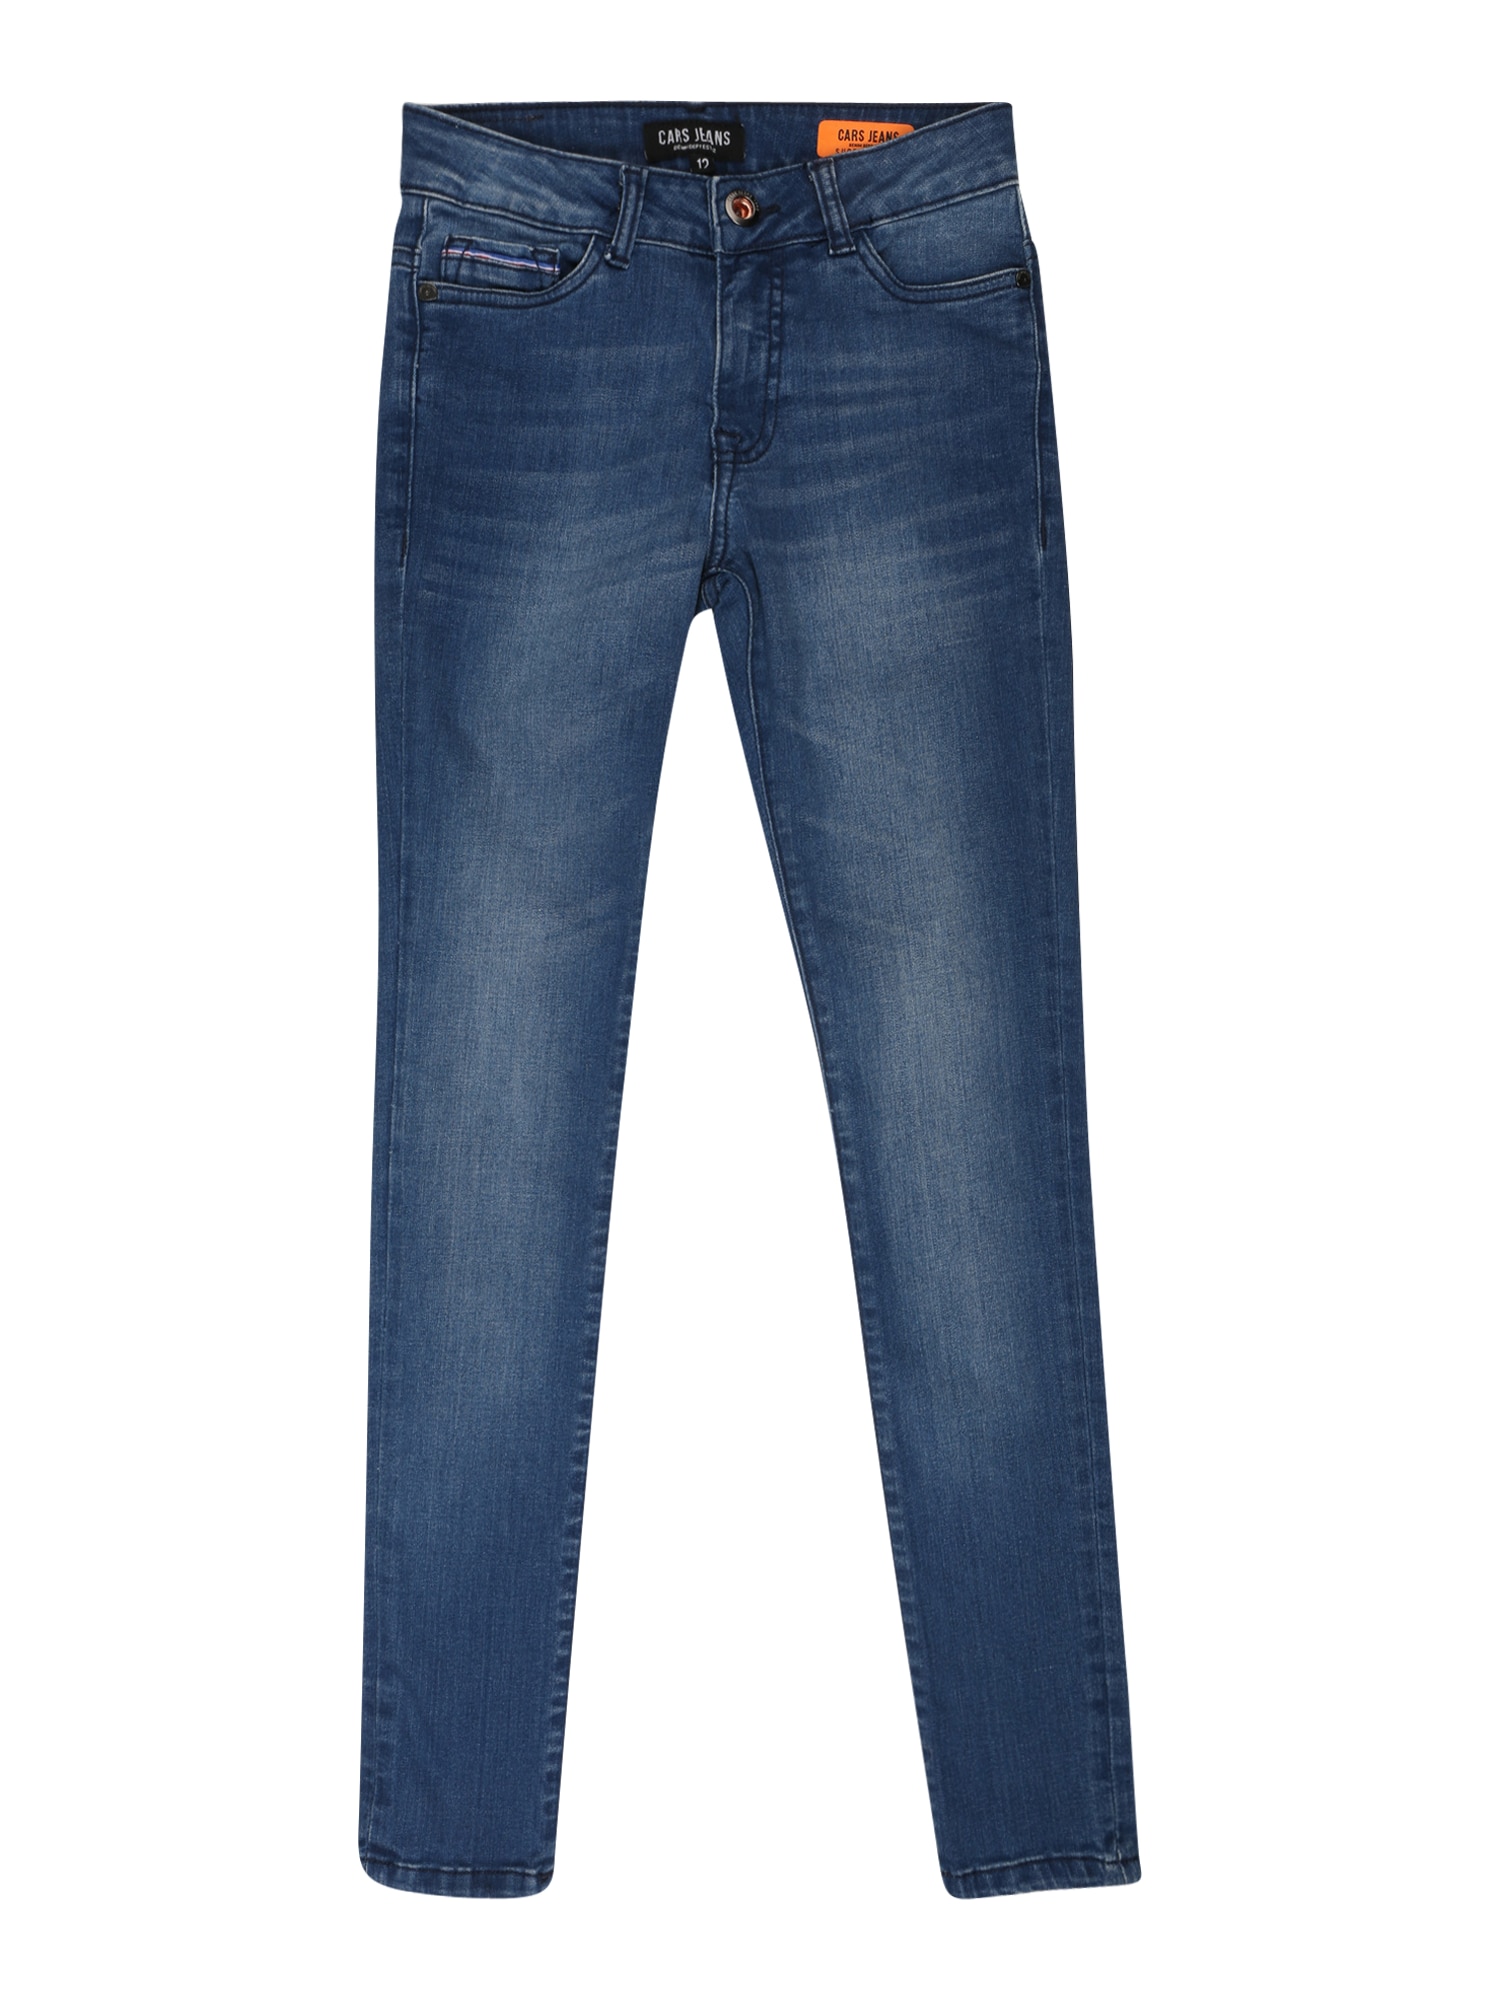 Cars Jeans Džinsai 'DIEGO' tamsiai (džinso) mėlyna